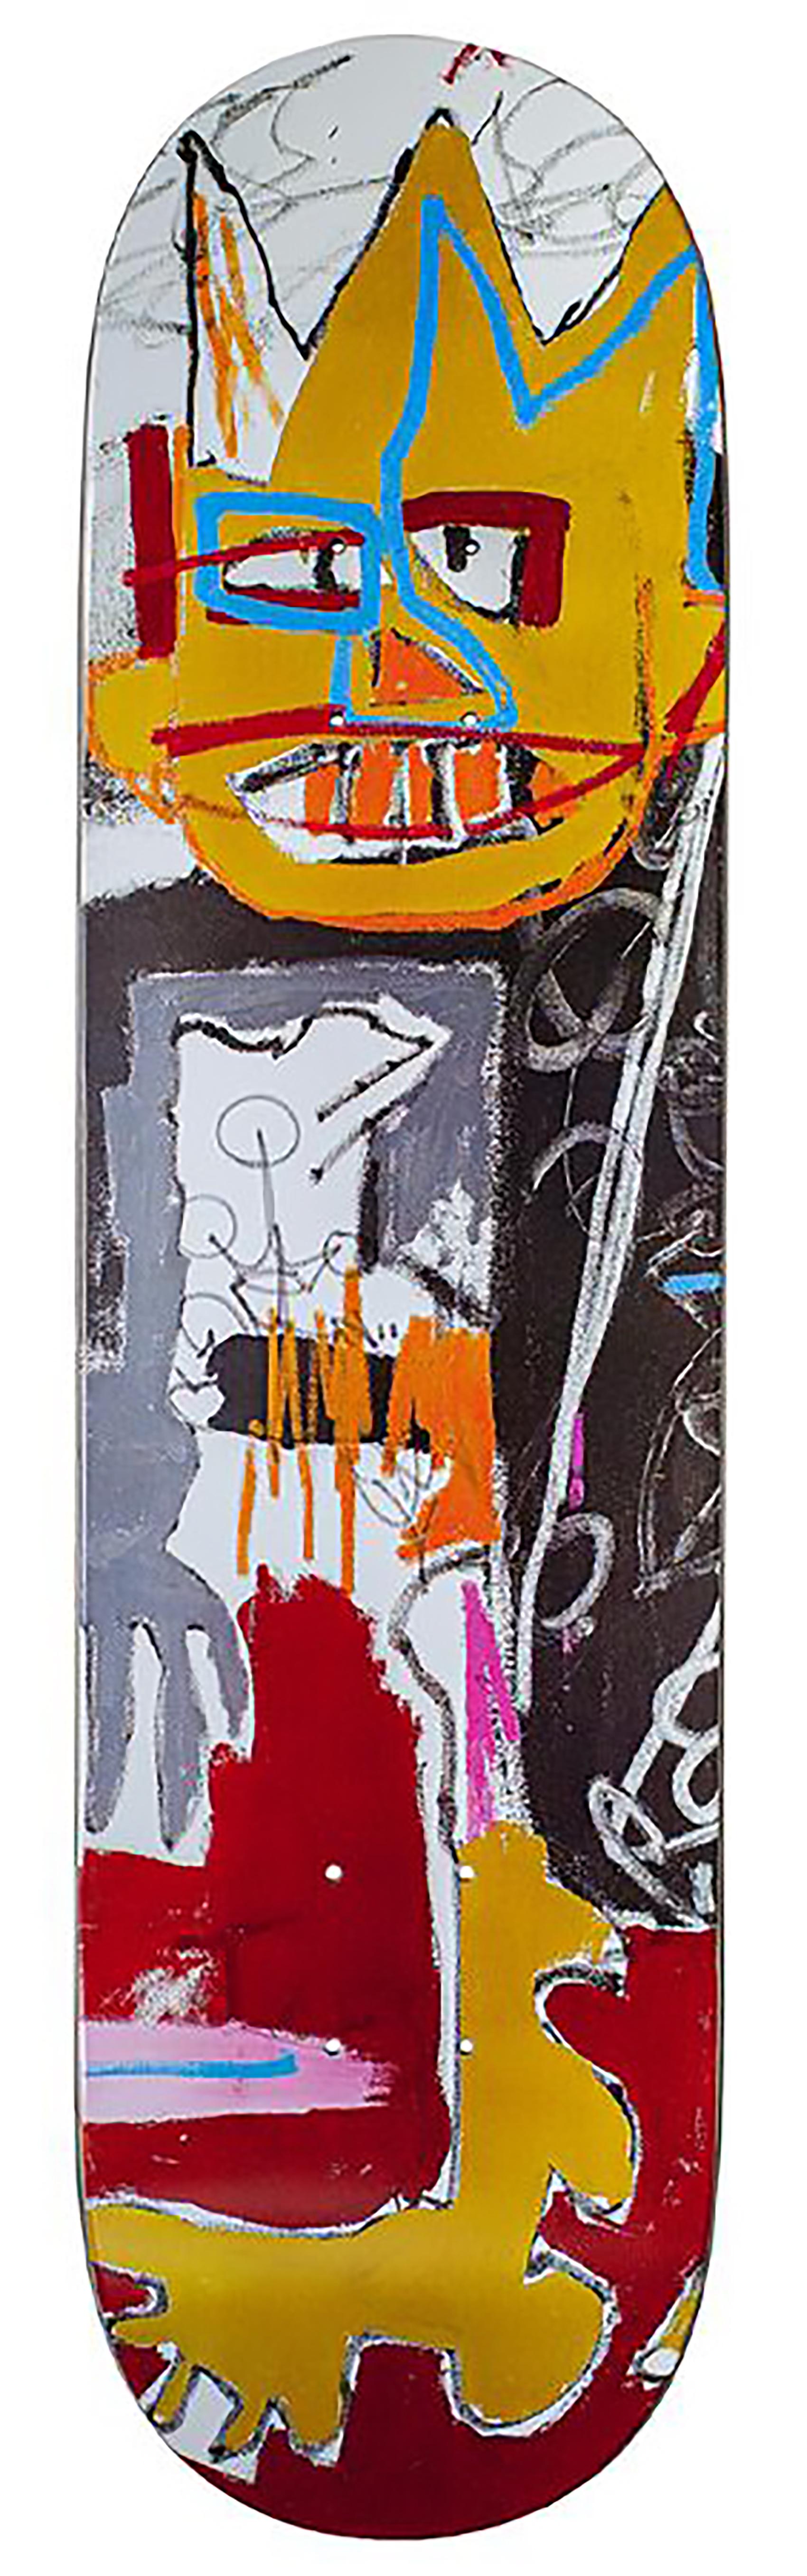 Basquiat Skateboard Decks: set of 3 works (Basquiat A-One, Toxic, Gold Griot)  - Pop Art Mixed Media Art by after Jean-Michel Basquiat